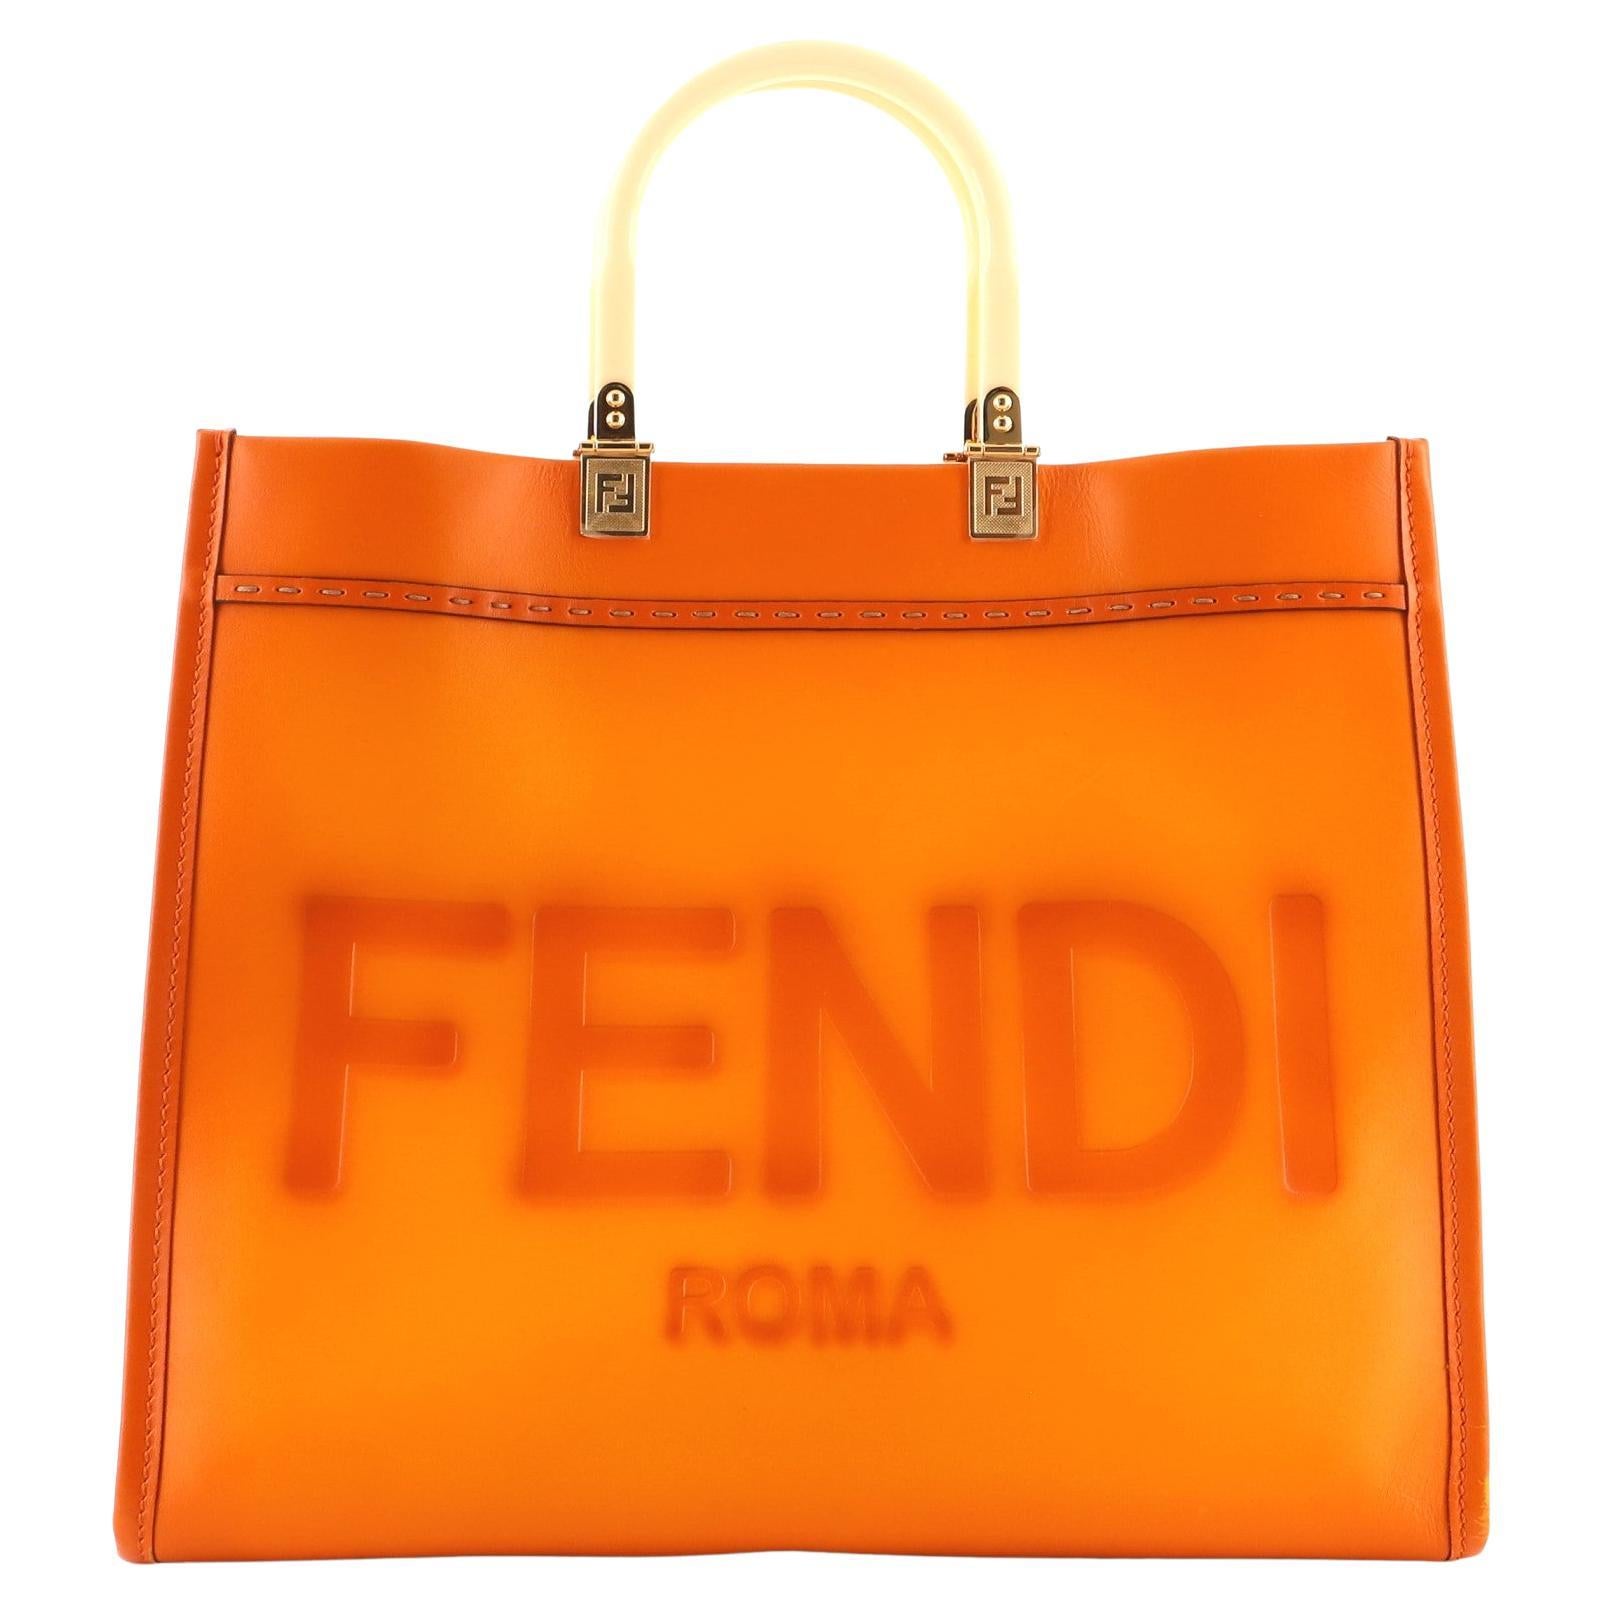 Fendi Sunshine Shopper Tote Leather Medium